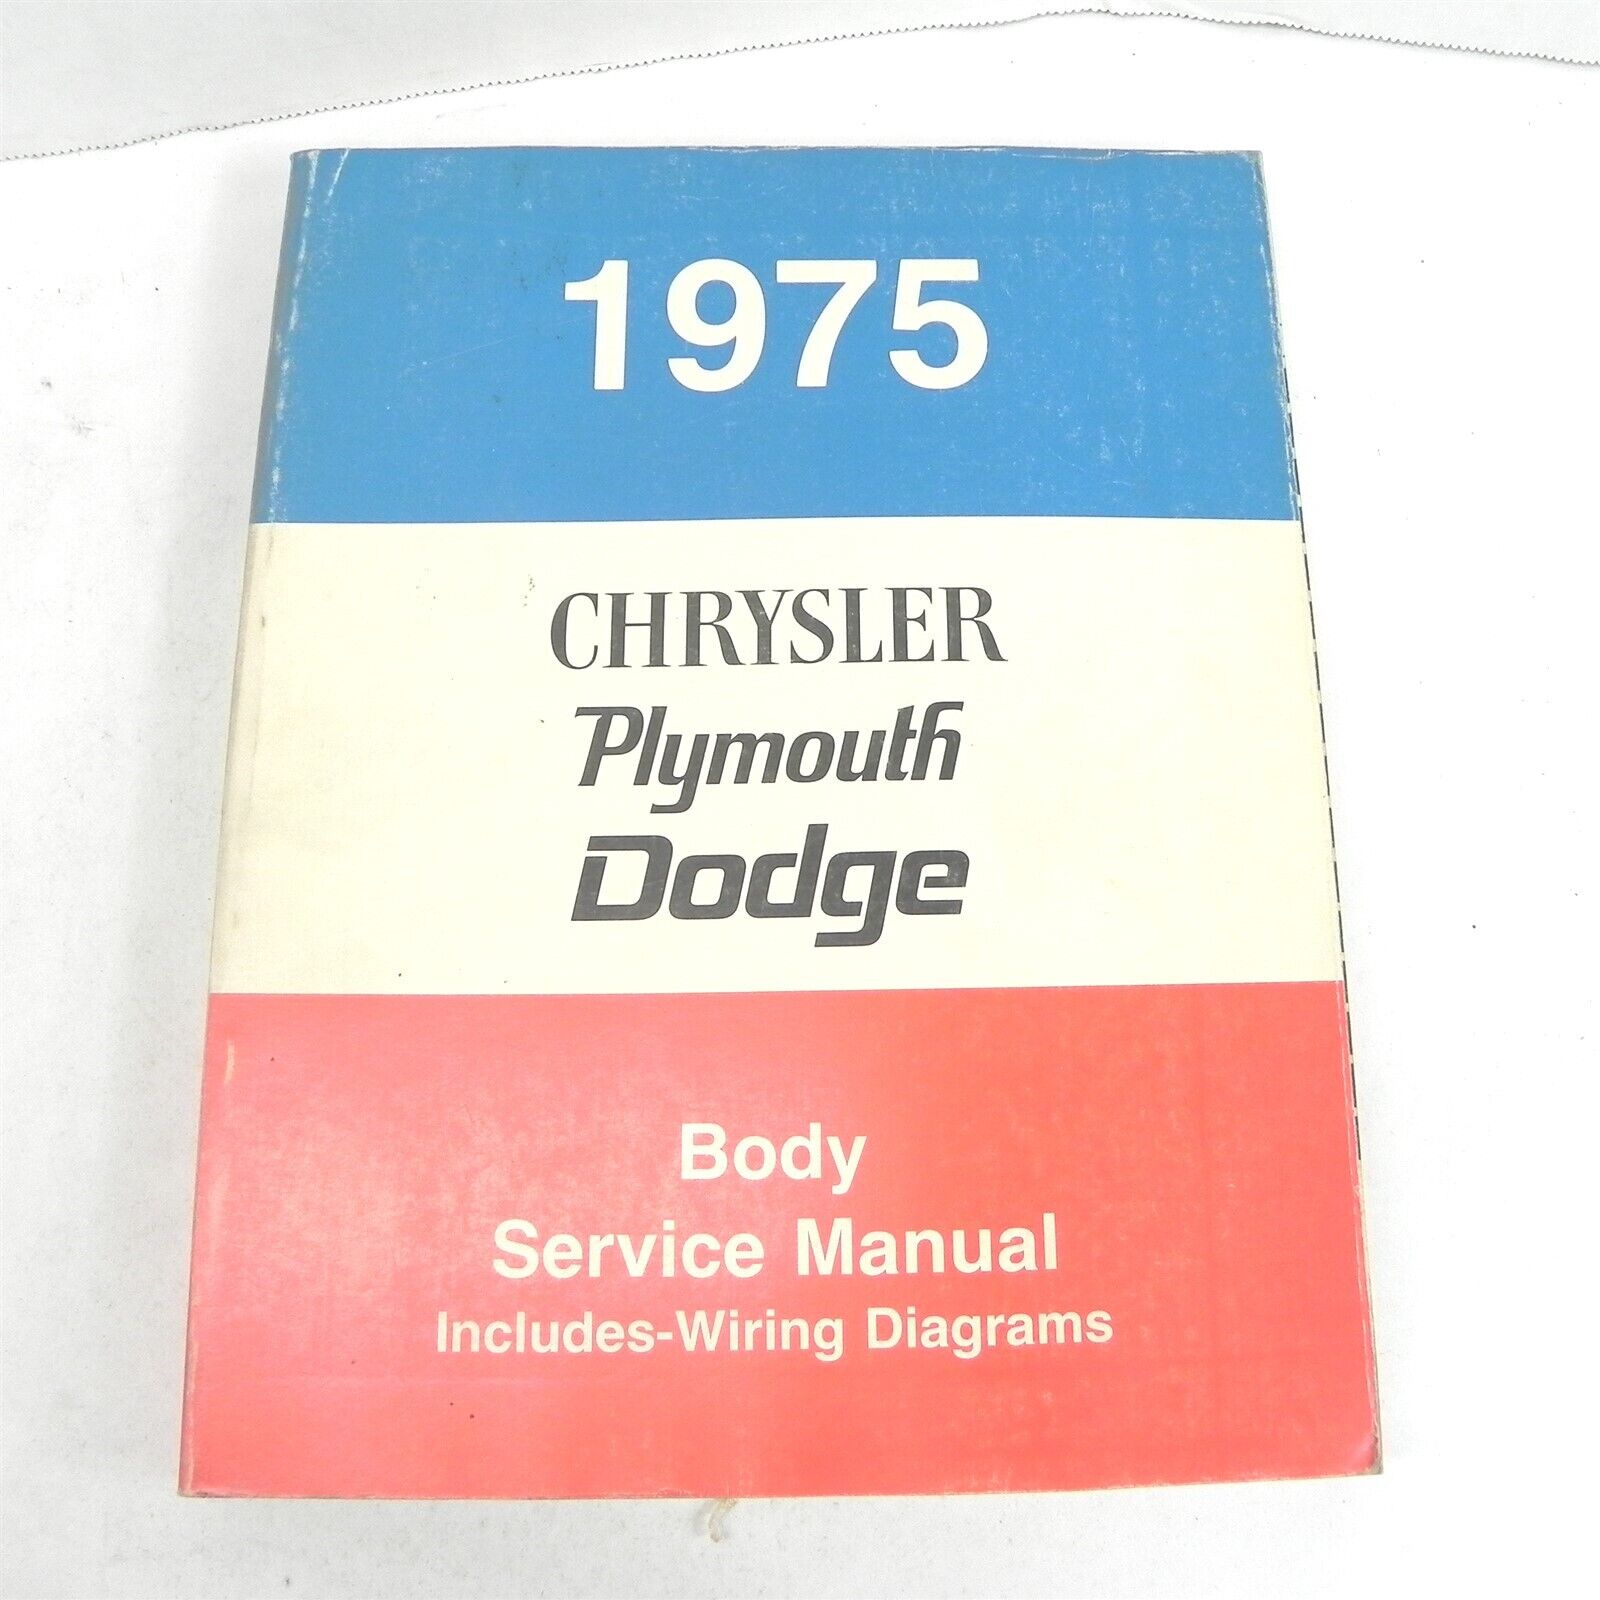 VTG 1975 MOPAR CHYSLER PLYMOUTH DODGE BODY SERVICE MANUAL WITH WIRING DIAGRAMS